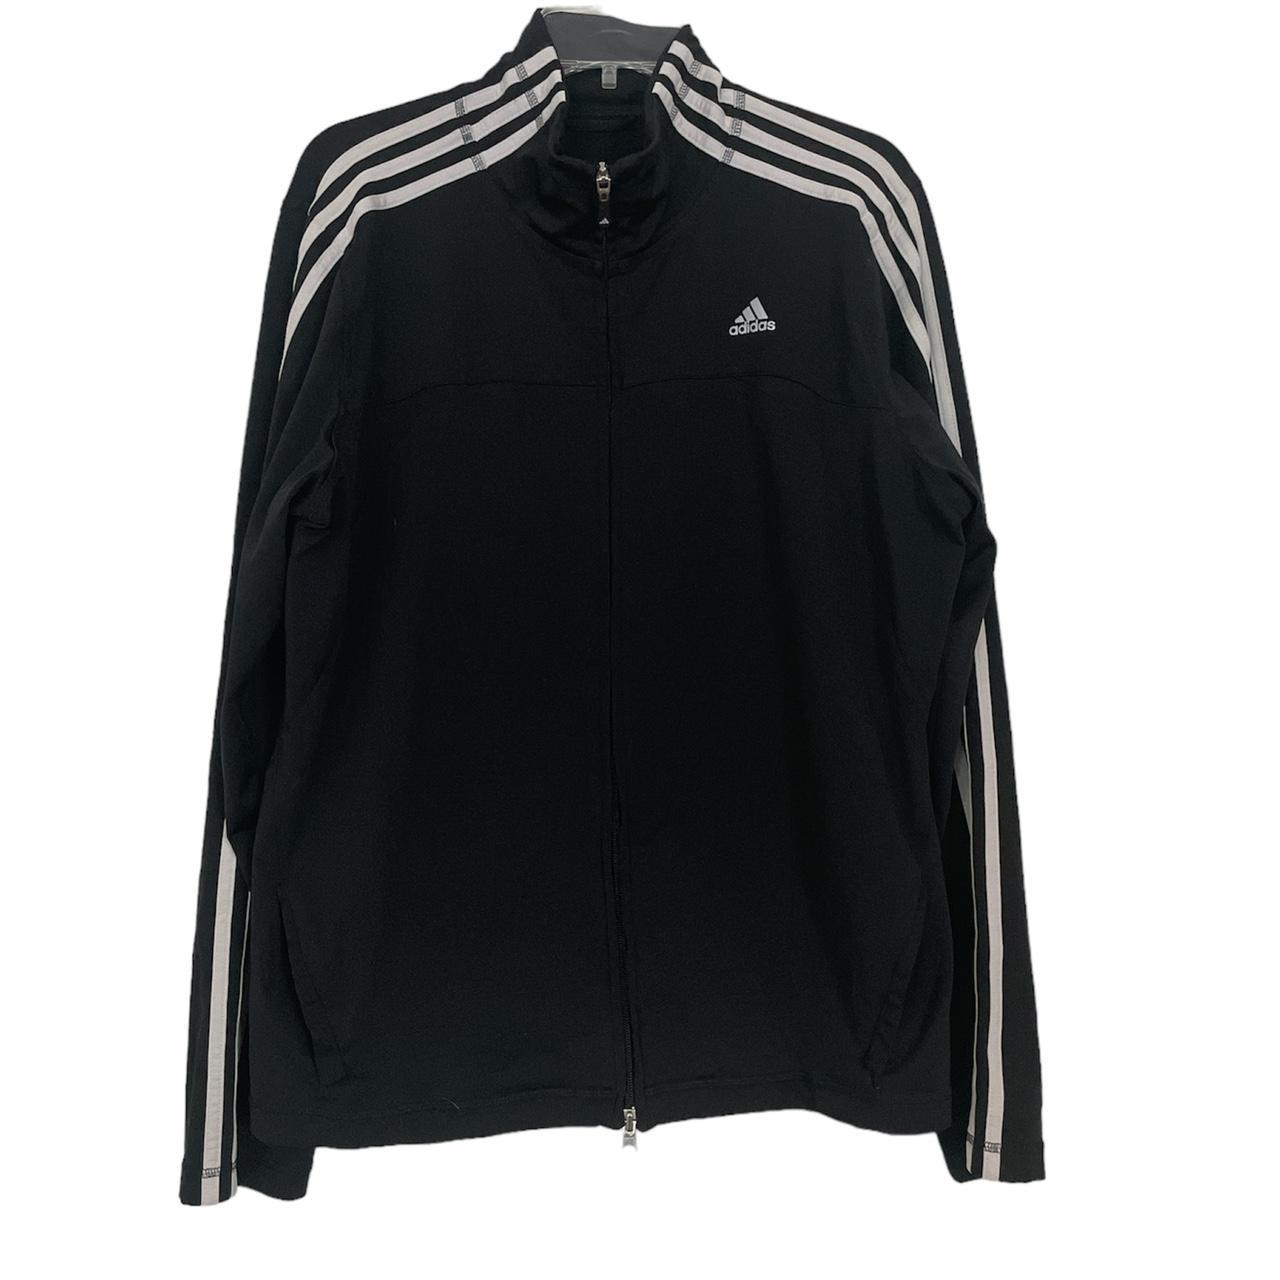 Adidas track jacket, light weight and very... - Depop